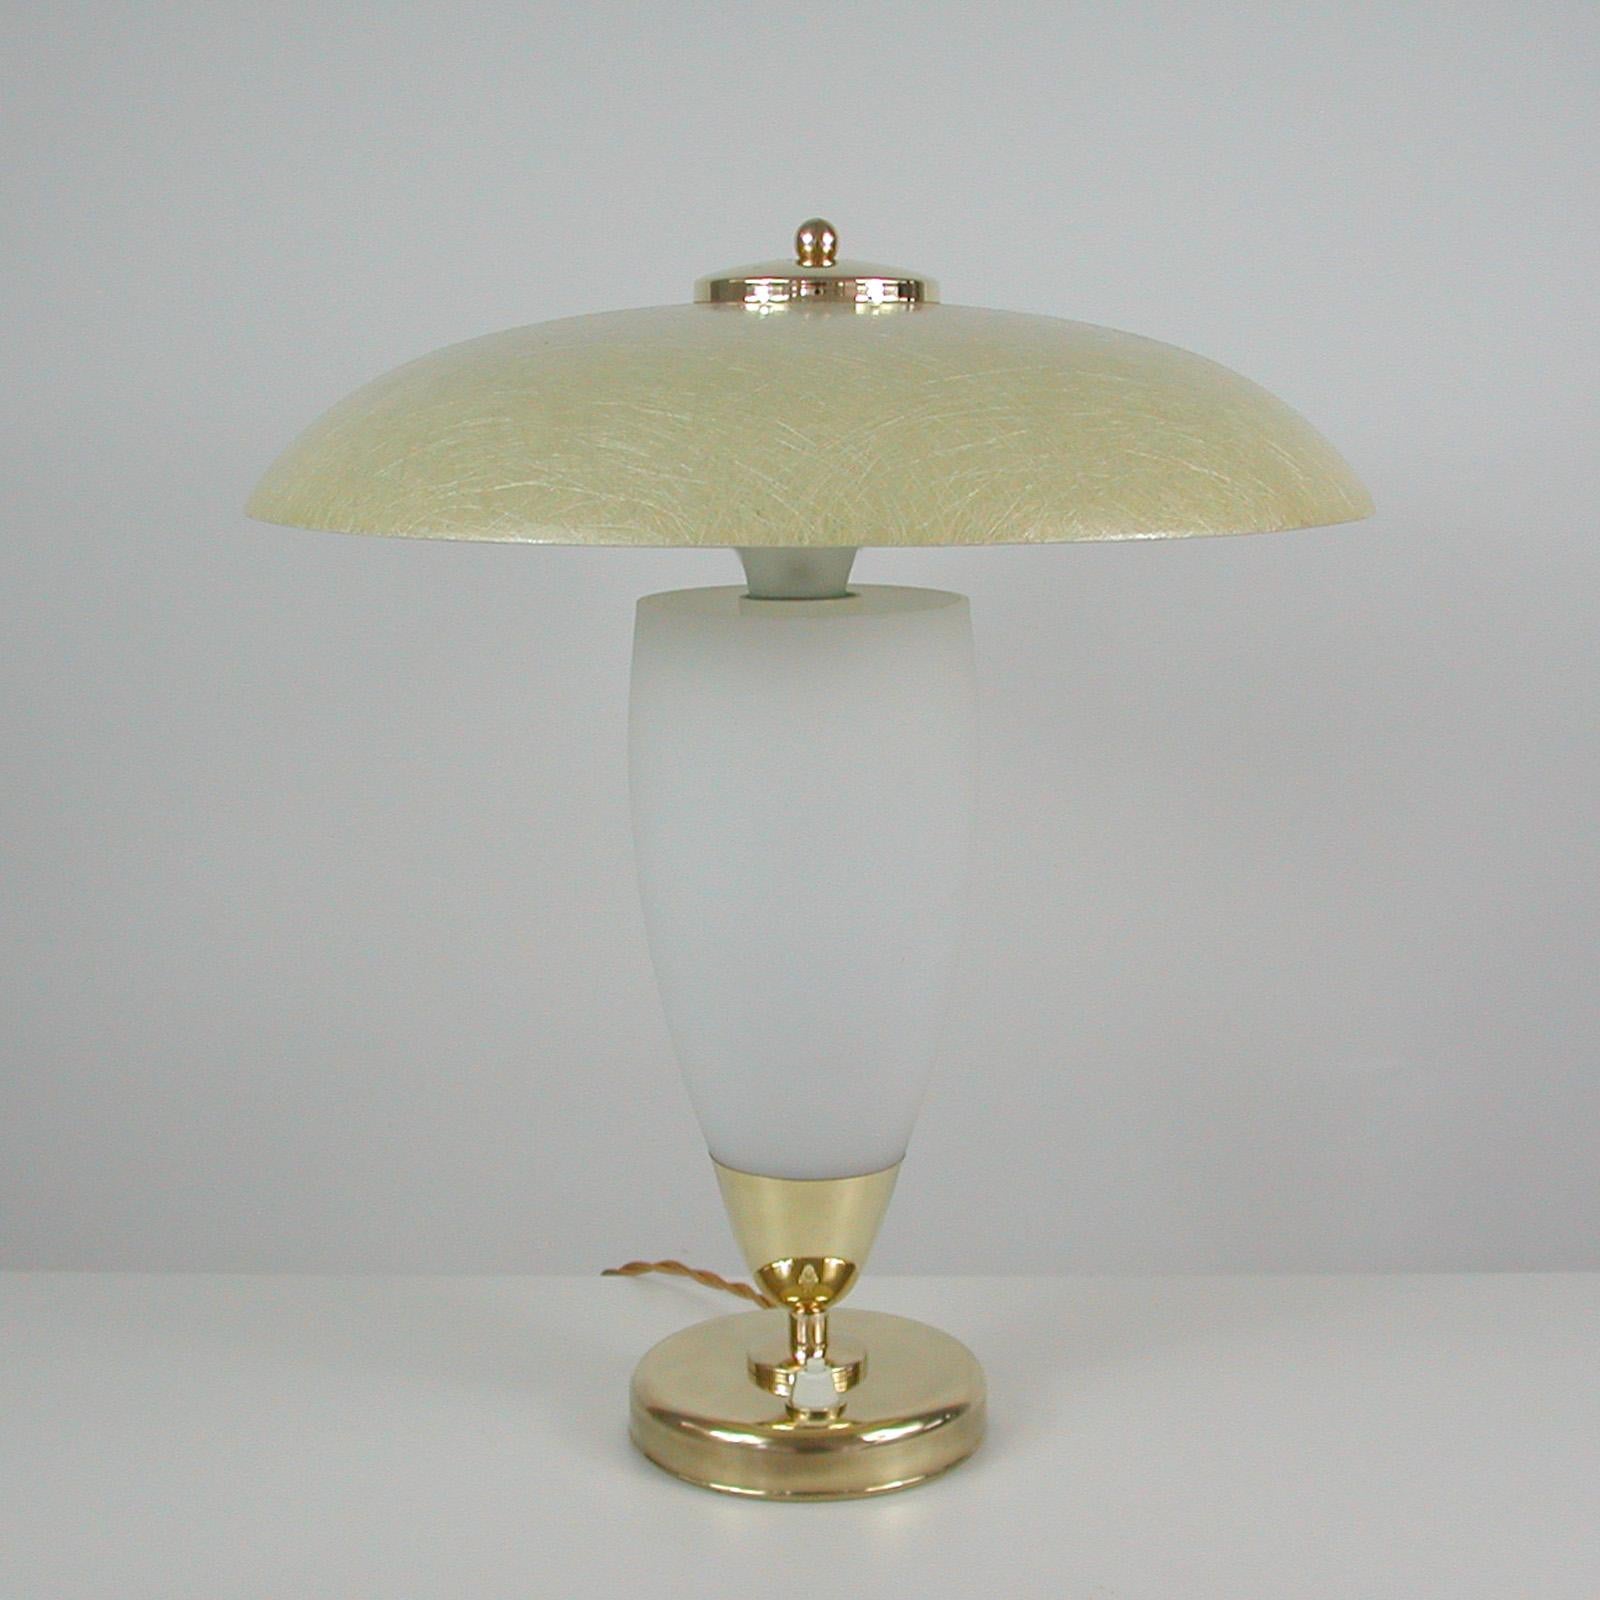 Midcentury Swedish Modern Brass, Opaline and Fiberglass Saucer Table Lamp, 1950s For Sale 5